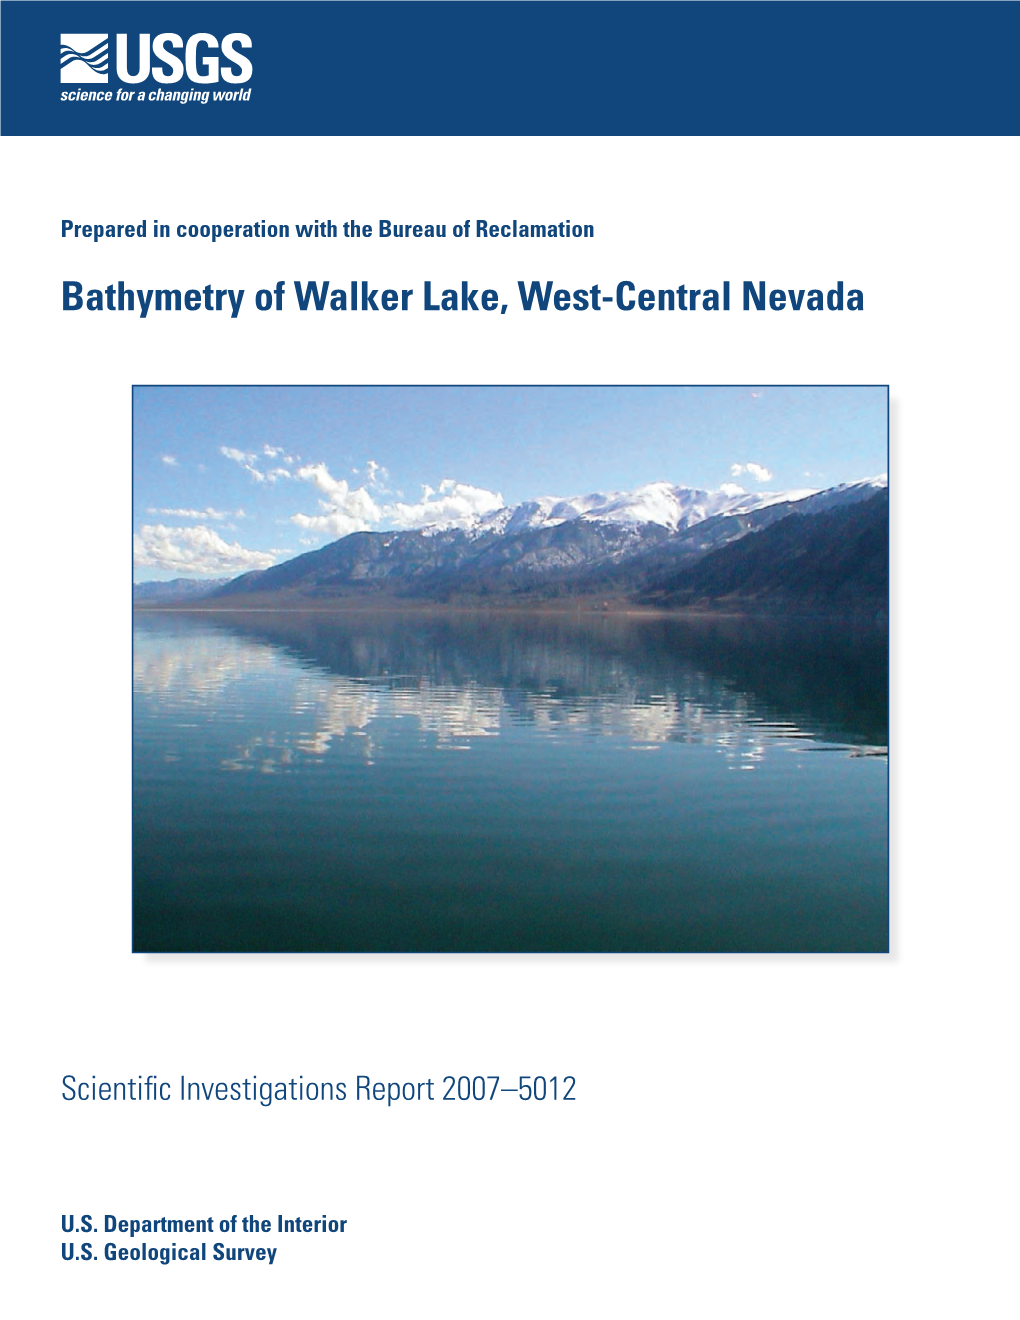 Bathymetry of Walker Lake, West-Central Nevada